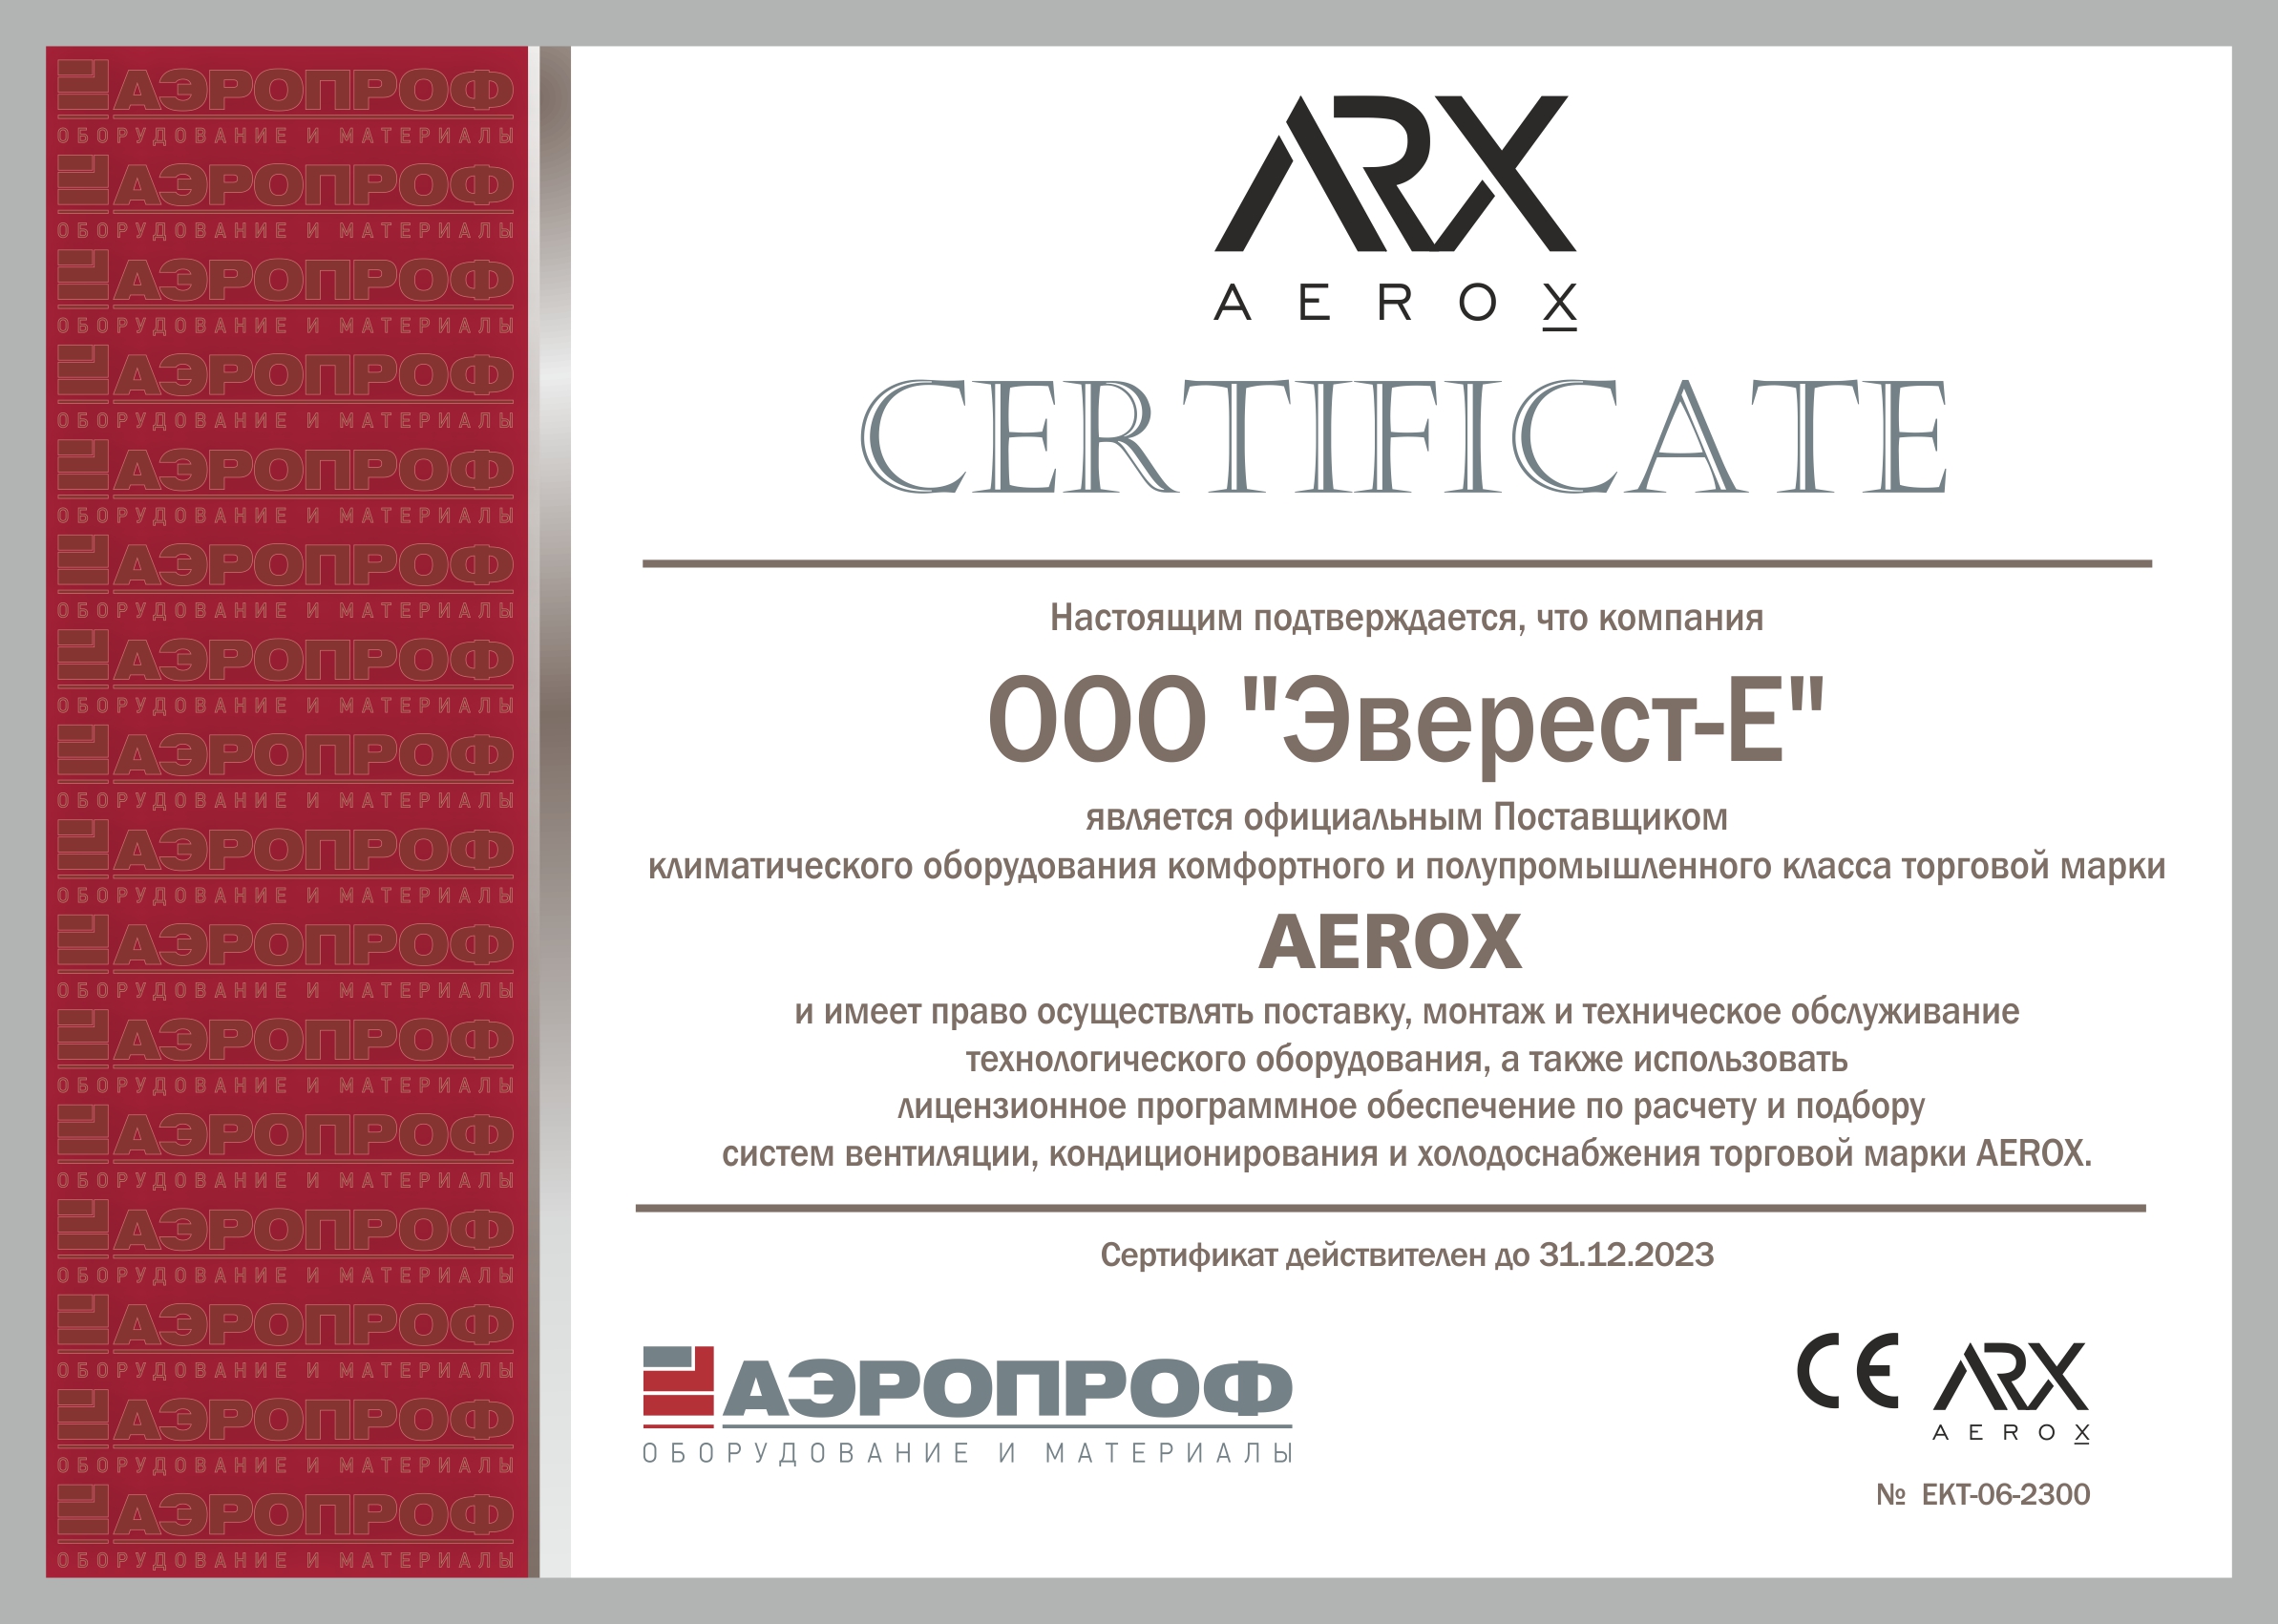 sert23-everest-arx Kondicioner Aero ALRS-II-24IHA4-01/ALRS-II-24OHA4-01 kypit v Ekaterinbyrge v internet-magazine KlimatMarket96.ry Сертификат официального дилера